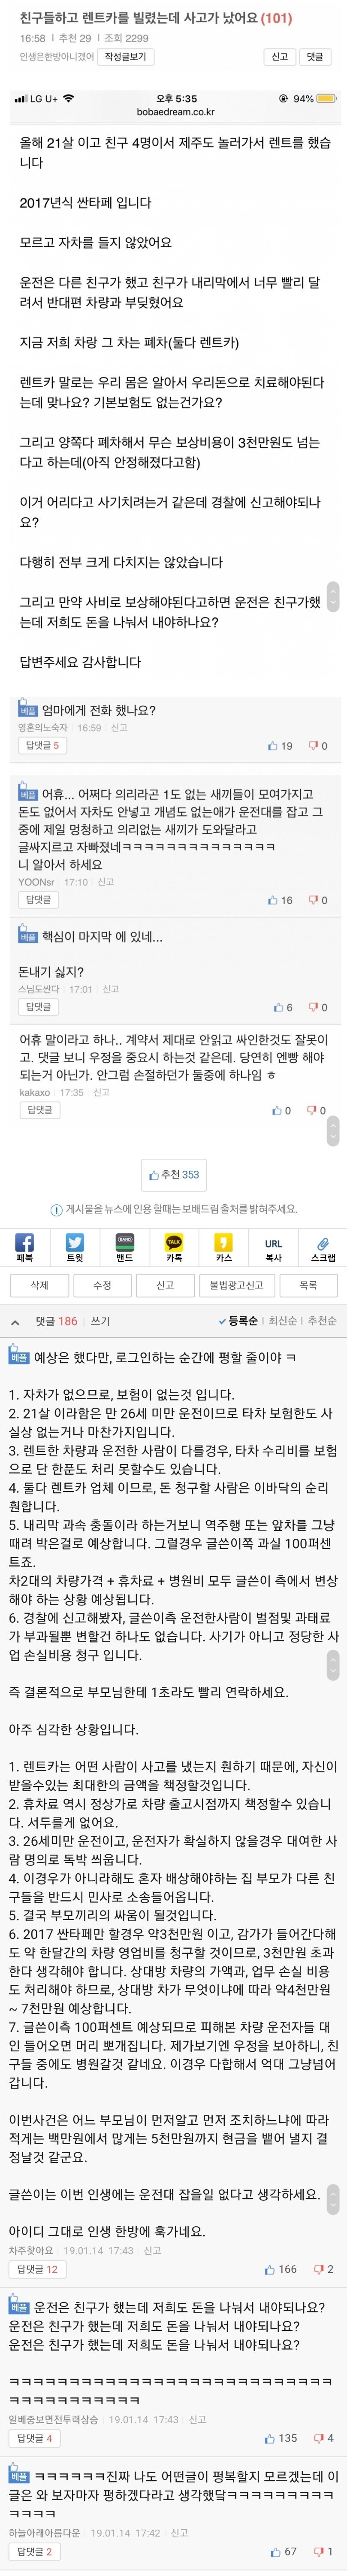 Screenshot_20190115-065621_Samsung Internet.jpg